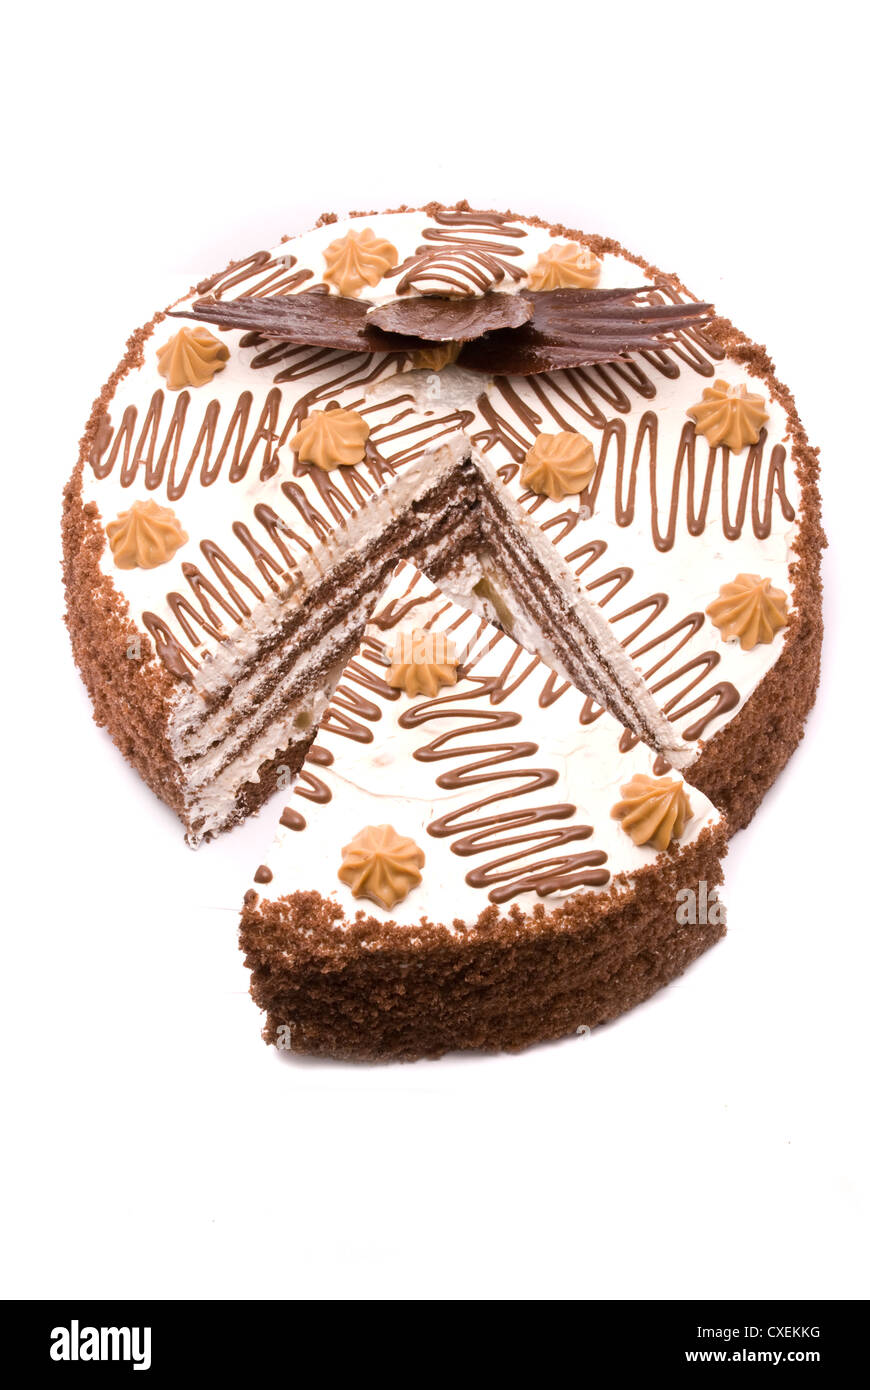 Chocolate pie on a white background Stock Photo